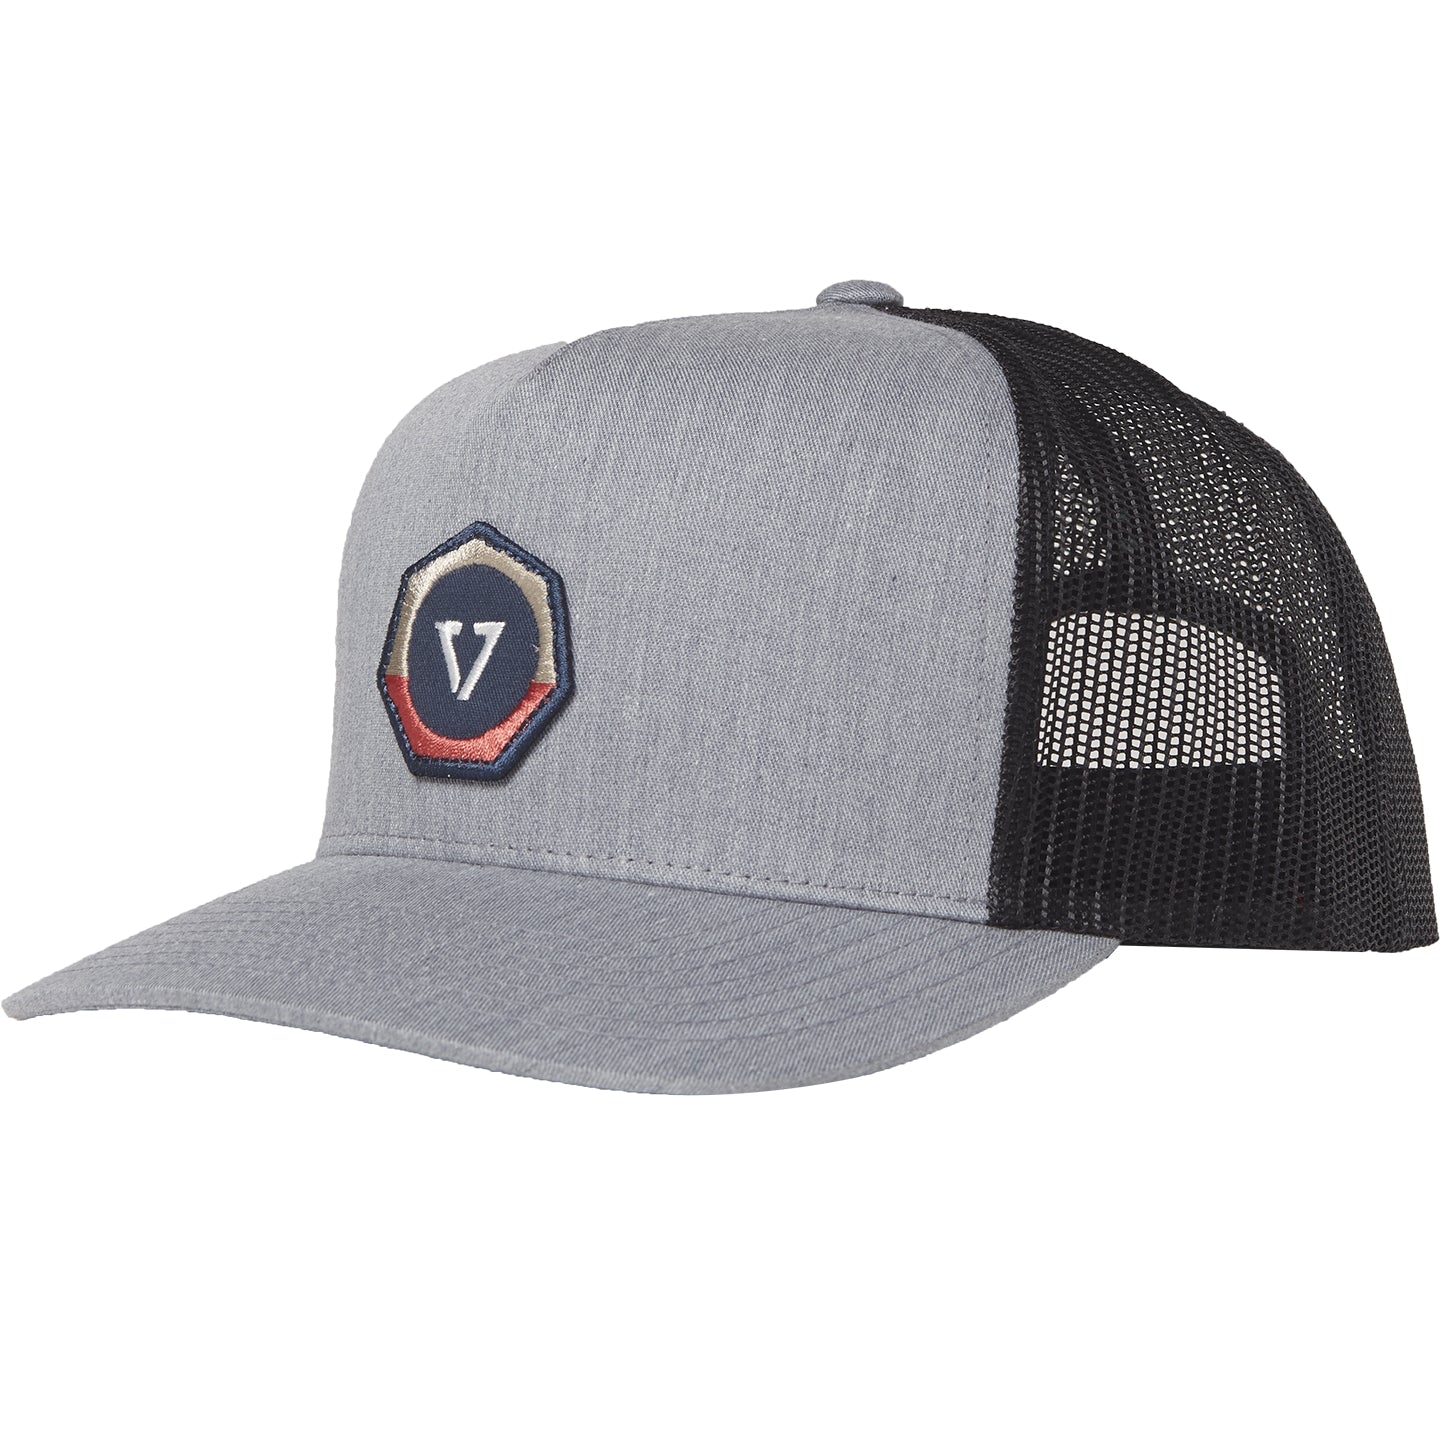 Vissla The Trip Trucker Hat